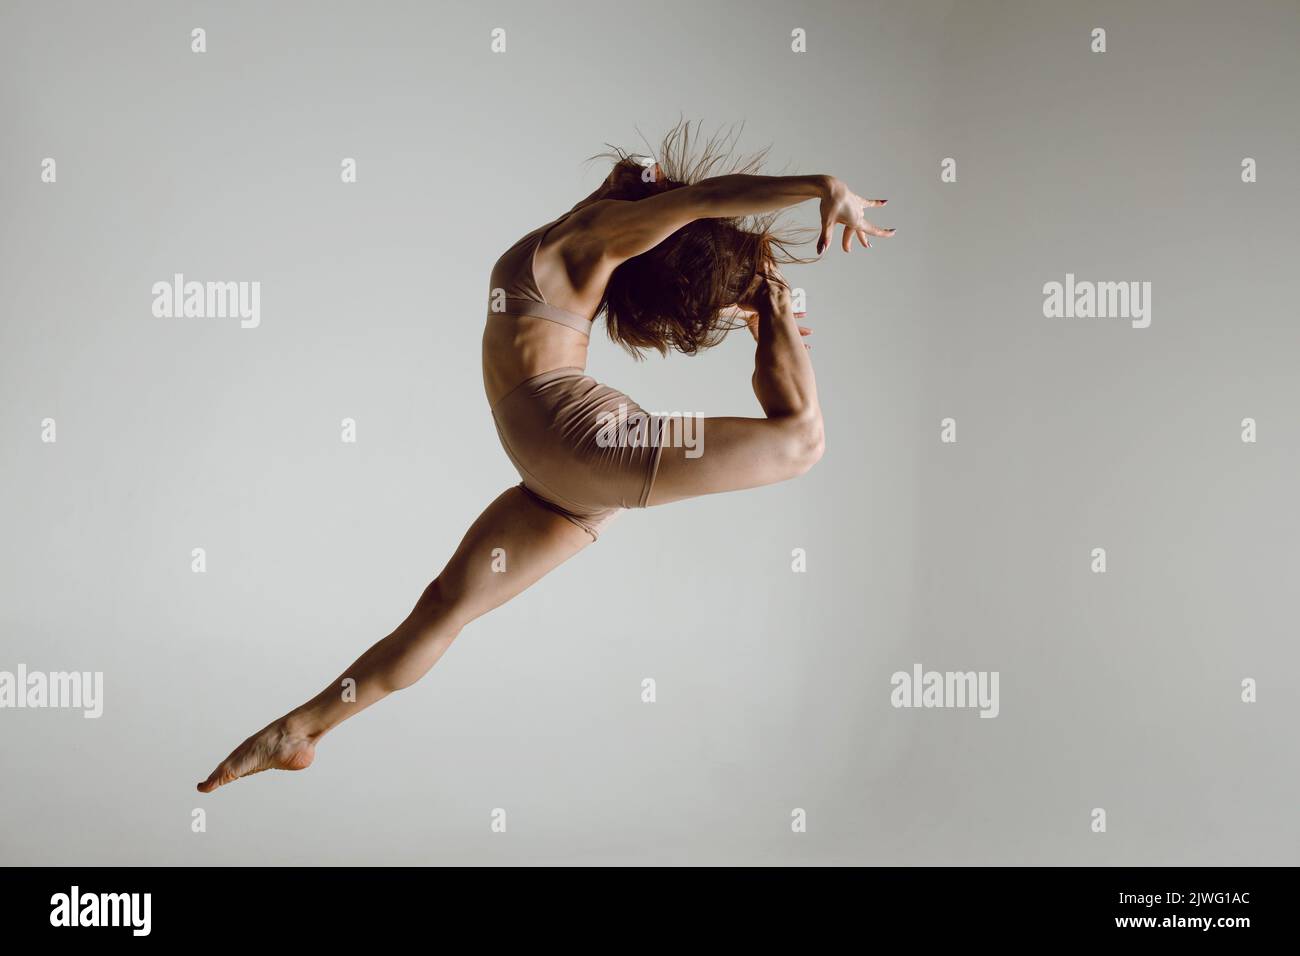 Young woman dancer dancing high heels dance jumping leg-split Stock Photo